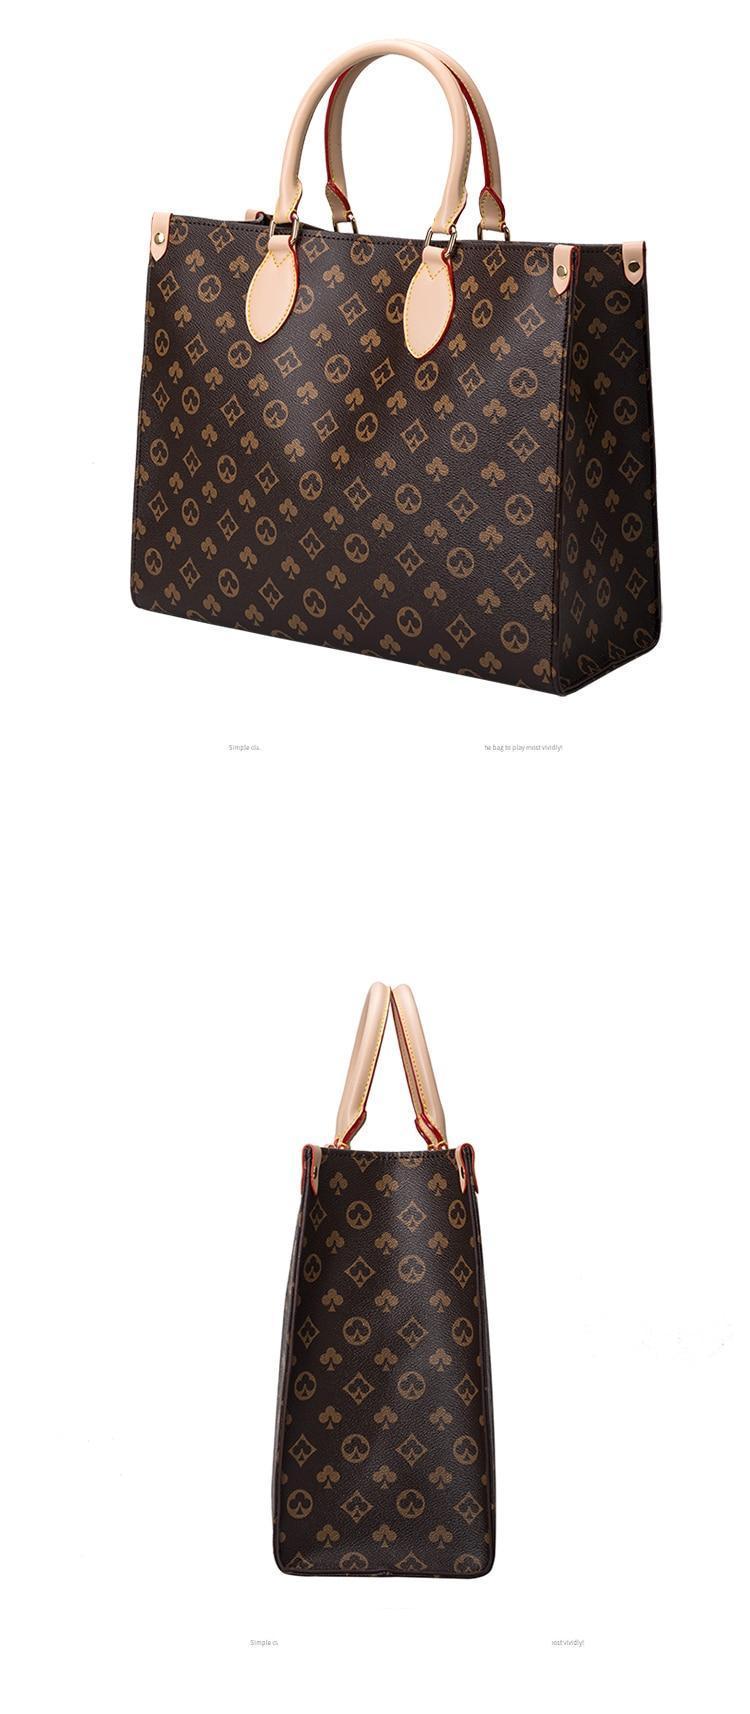 Luxury New Printed Color Matching Phopping Bag Women's Bag Fashion Tote Handbags Large Capacity One-Shoulder Handbags